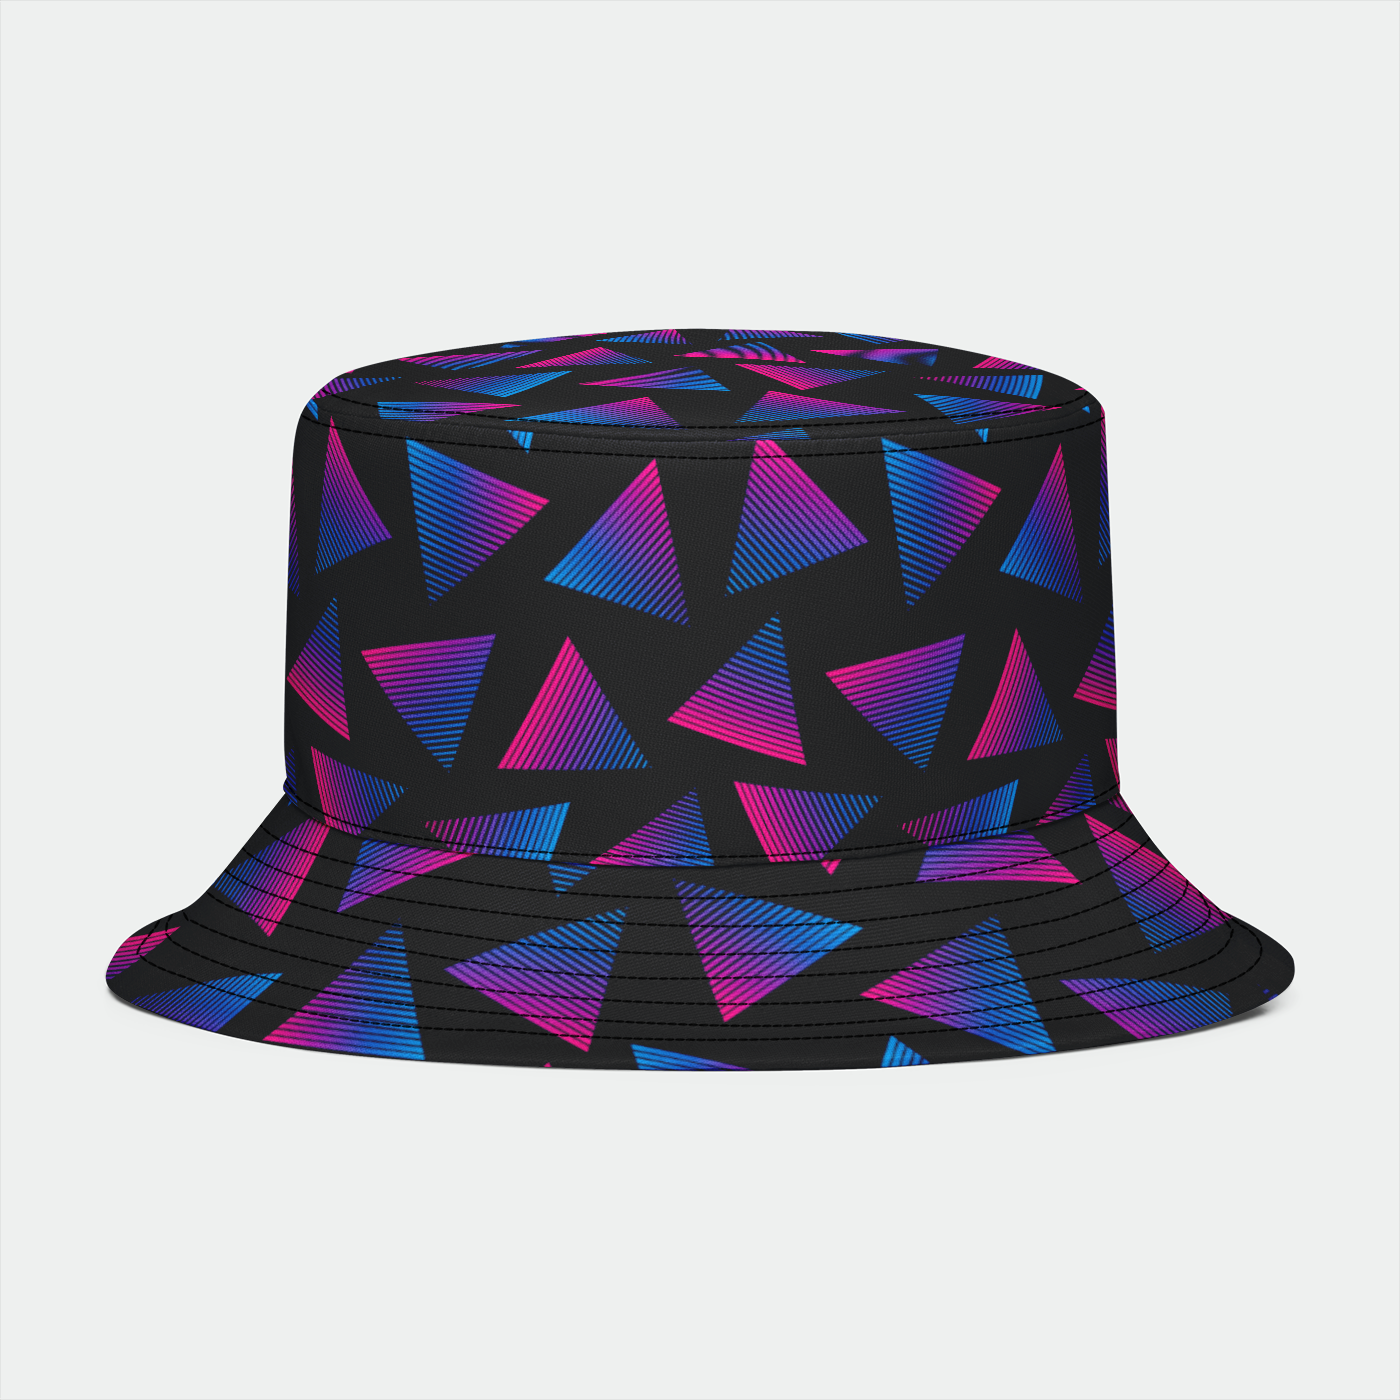 The Bermuda Triangle Bucket Hat